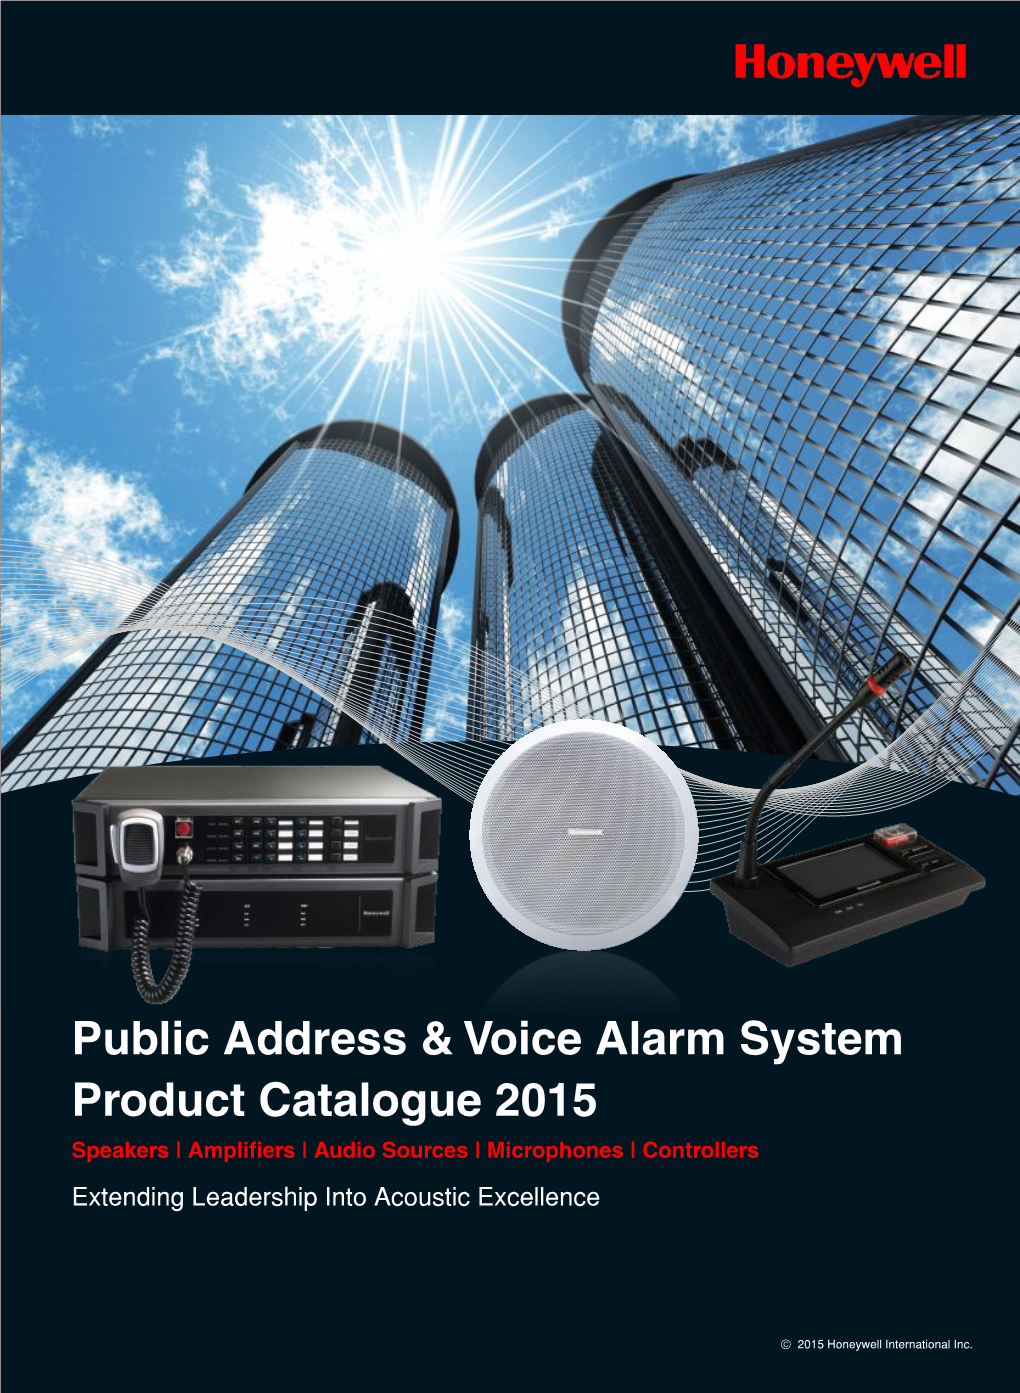 Public Address & Voice Alarm System Product Catalogue 2015